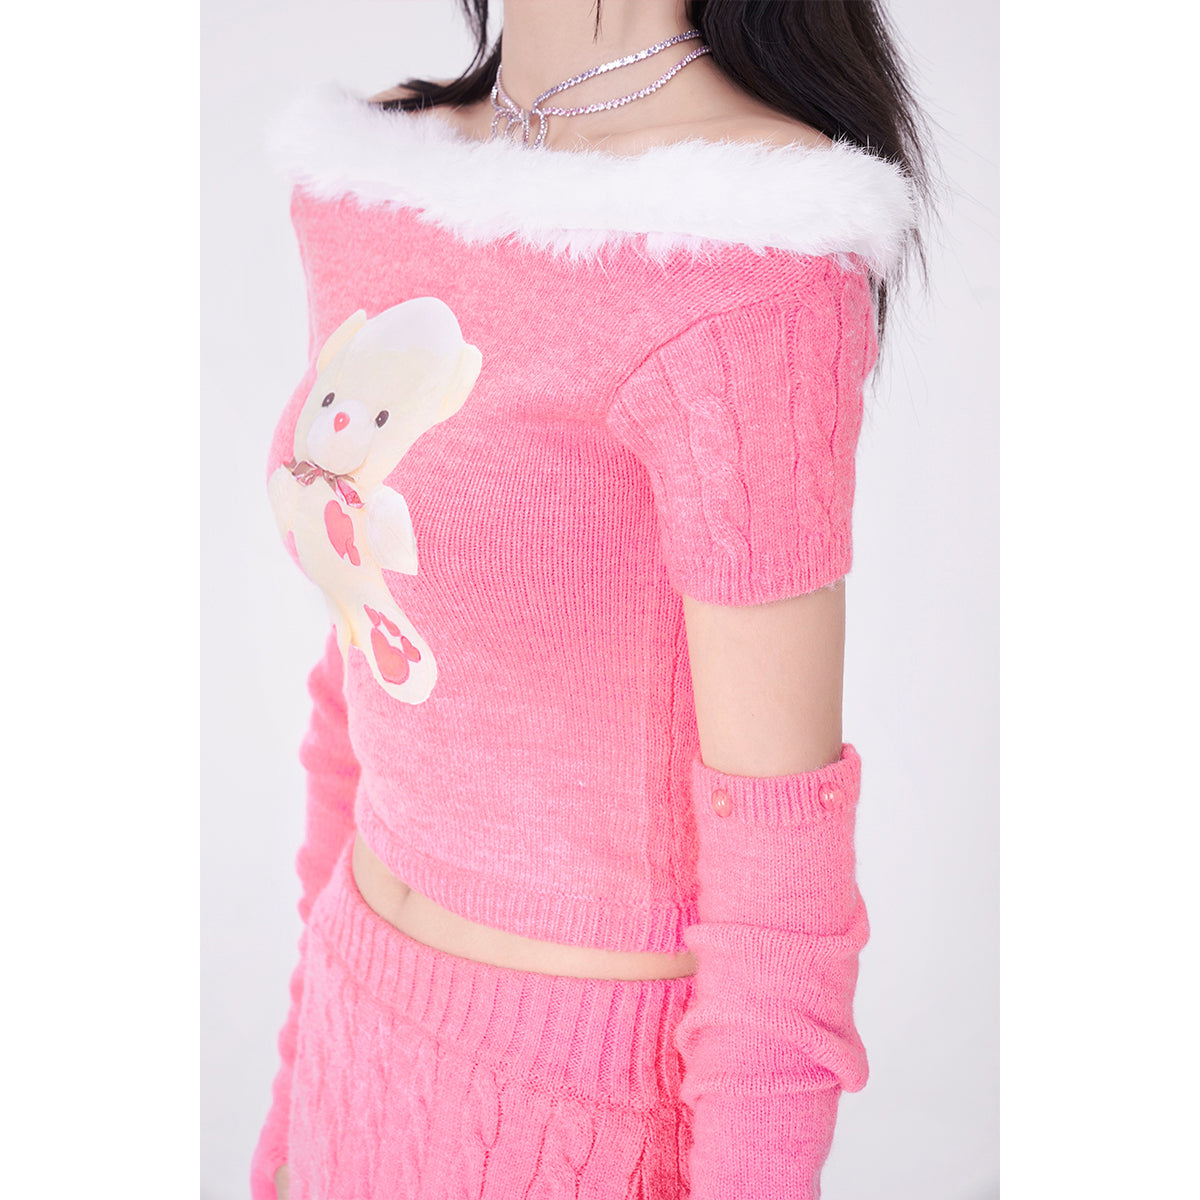 Original Autumn and Winter Girl Teddy Bear Print Fur Collar Pink Slim Knit Bag Hip Skirt Set - Jam Garden